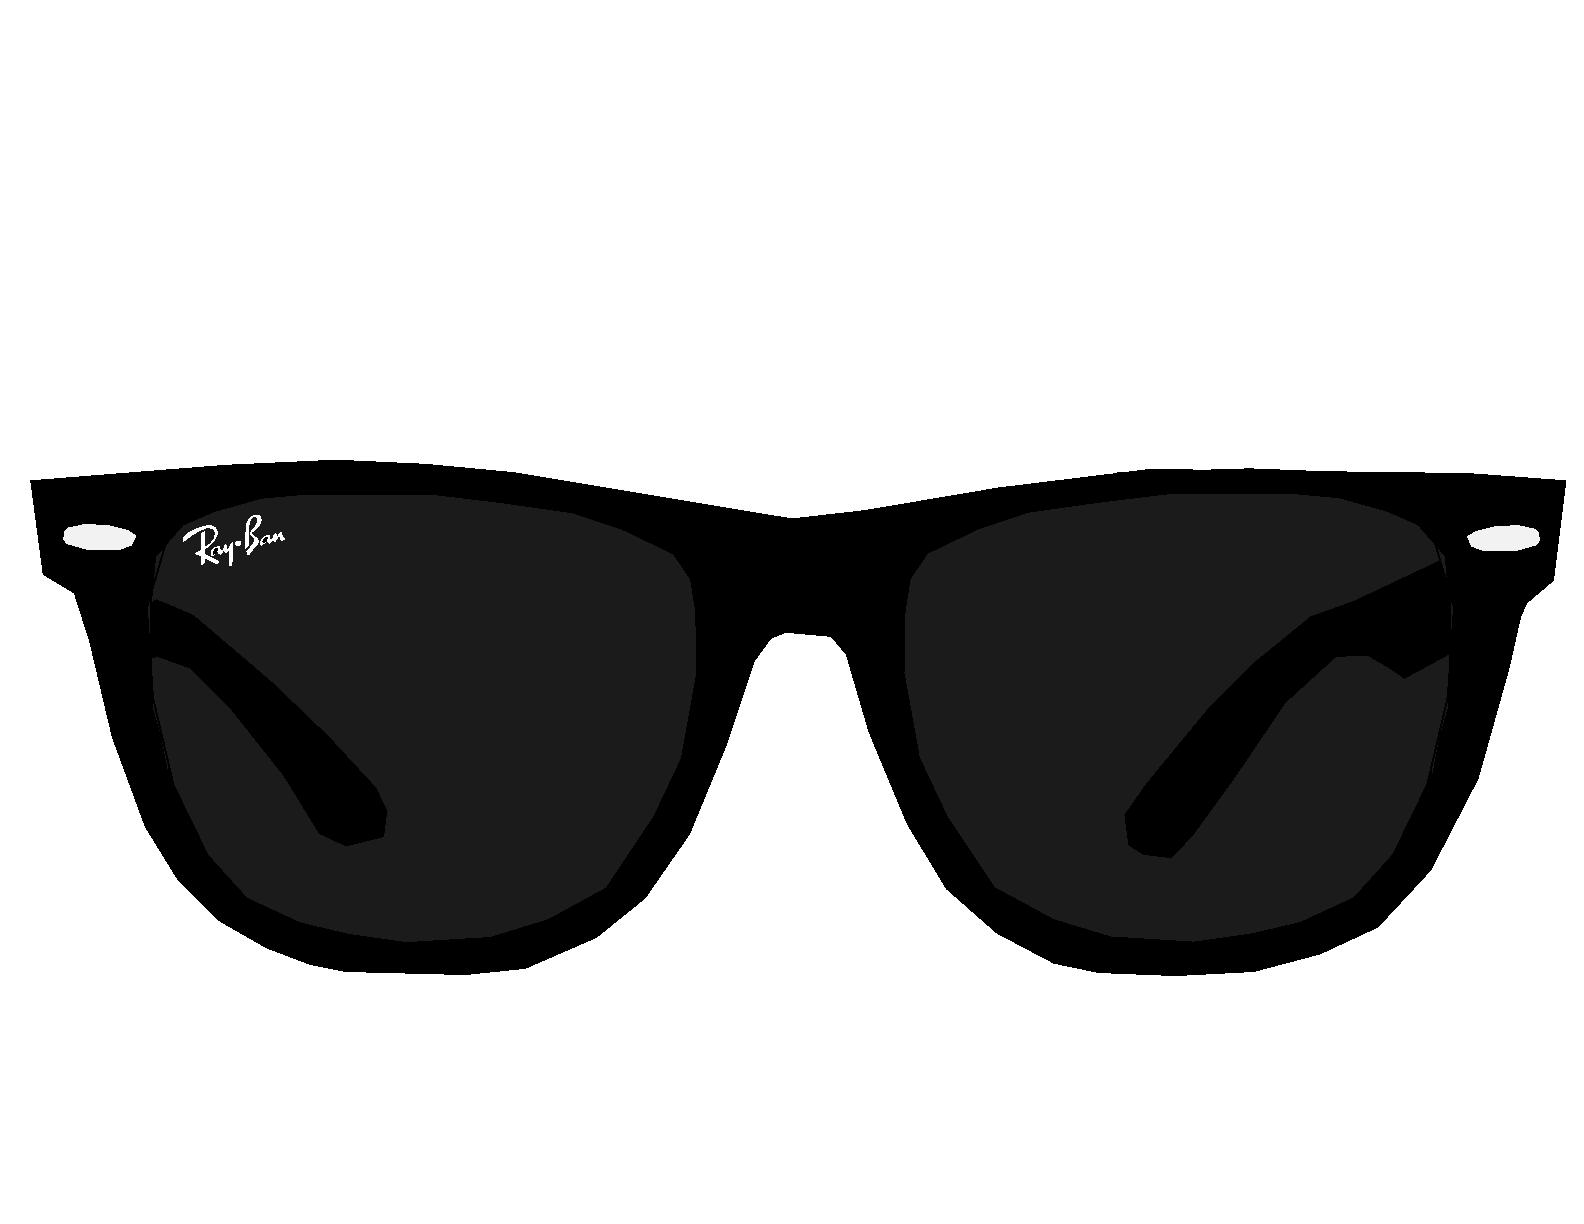 Black and purple sunglasses c